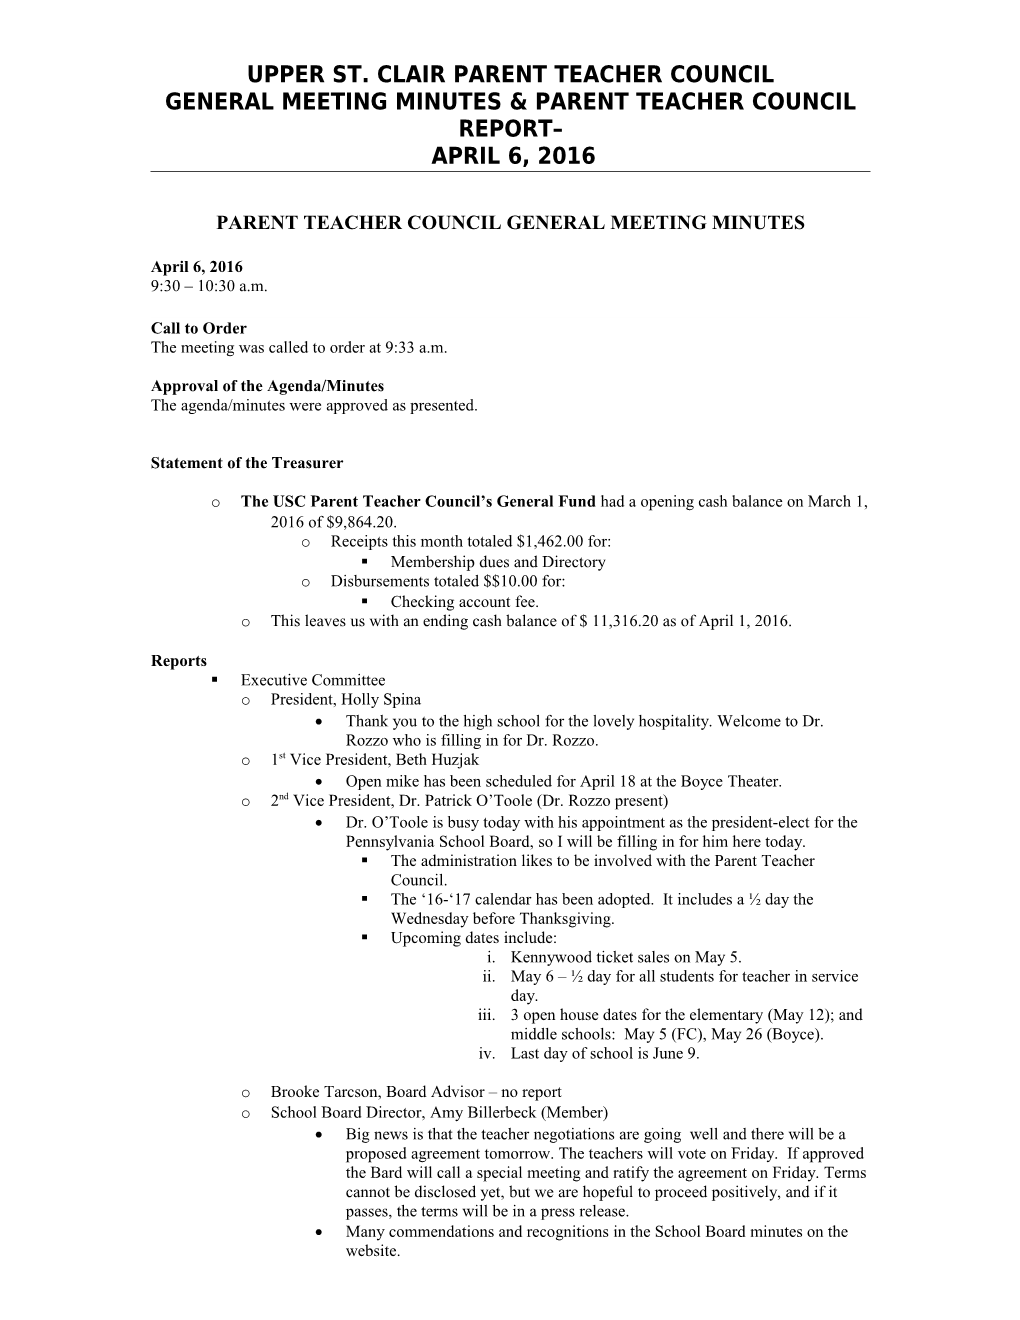 General Meeting Minutes & Parent Teacher Council Report